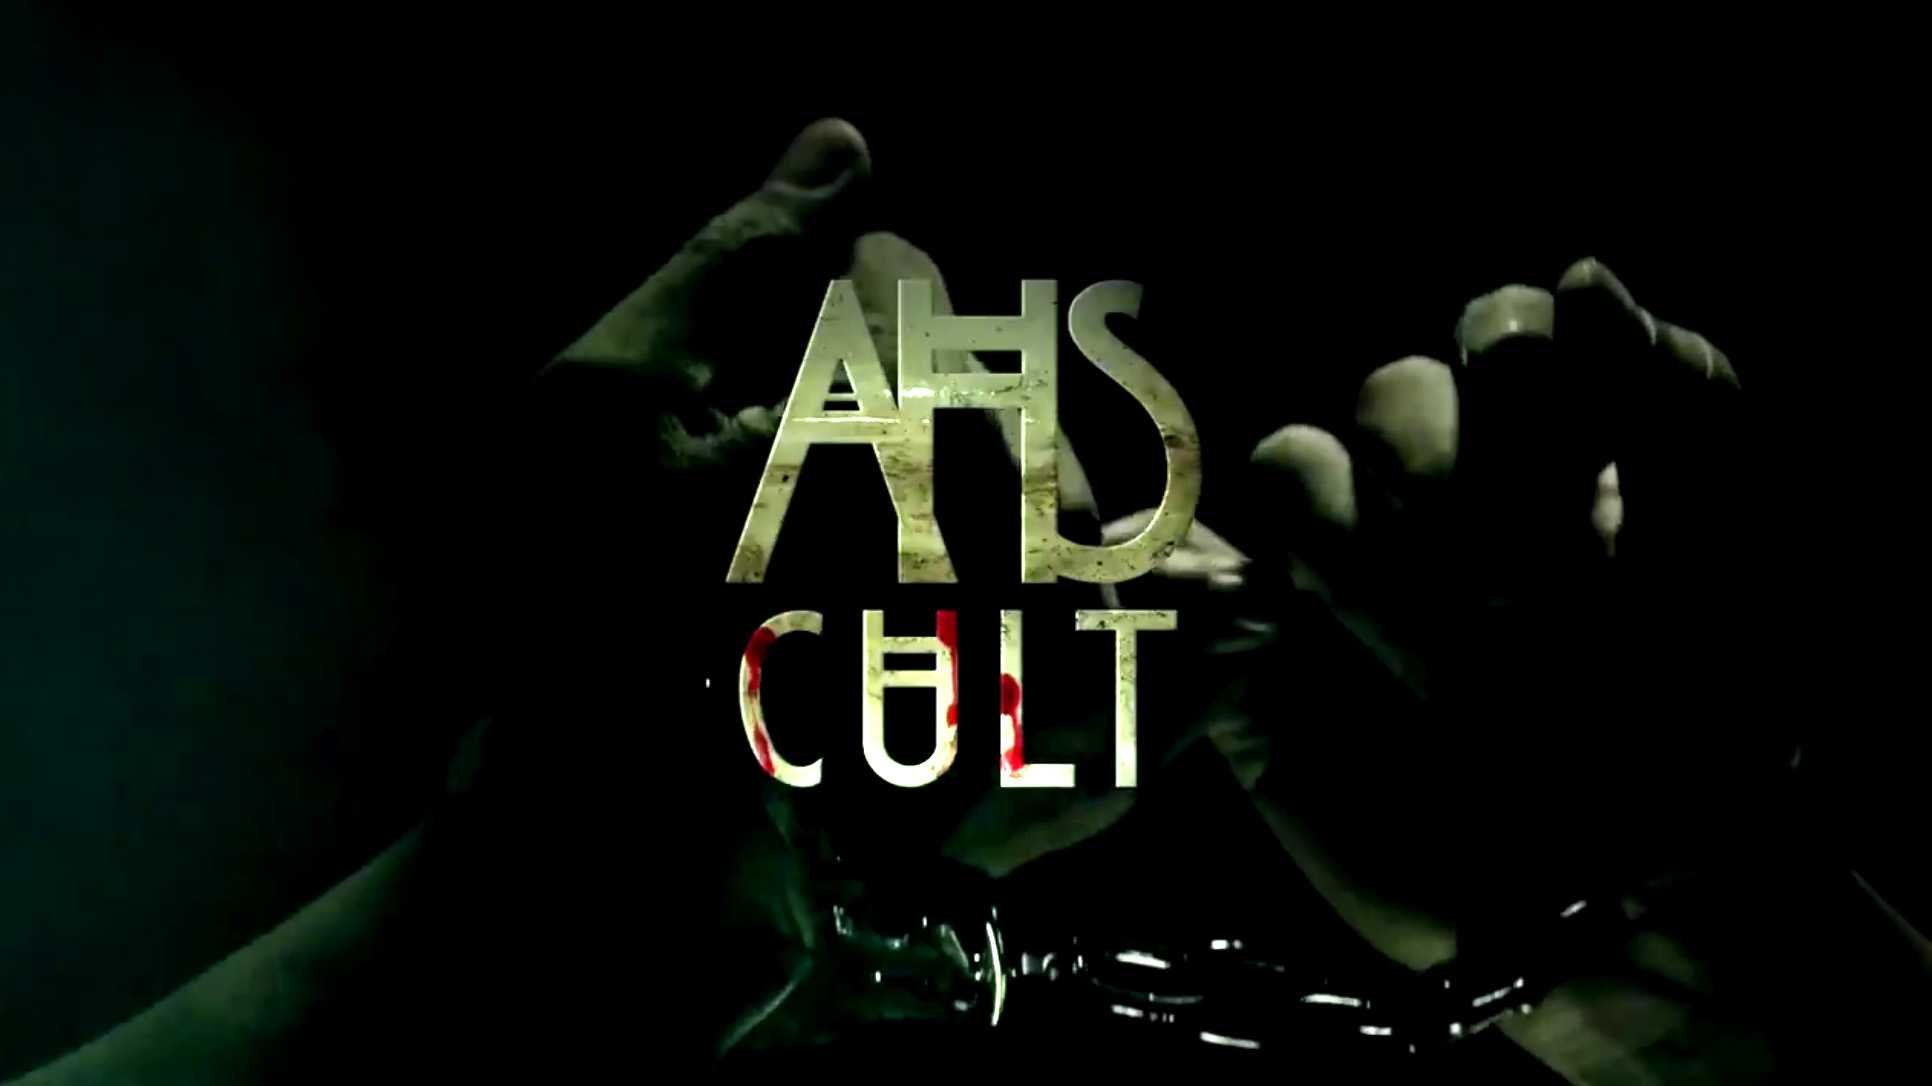 ahs cult theme sigla video